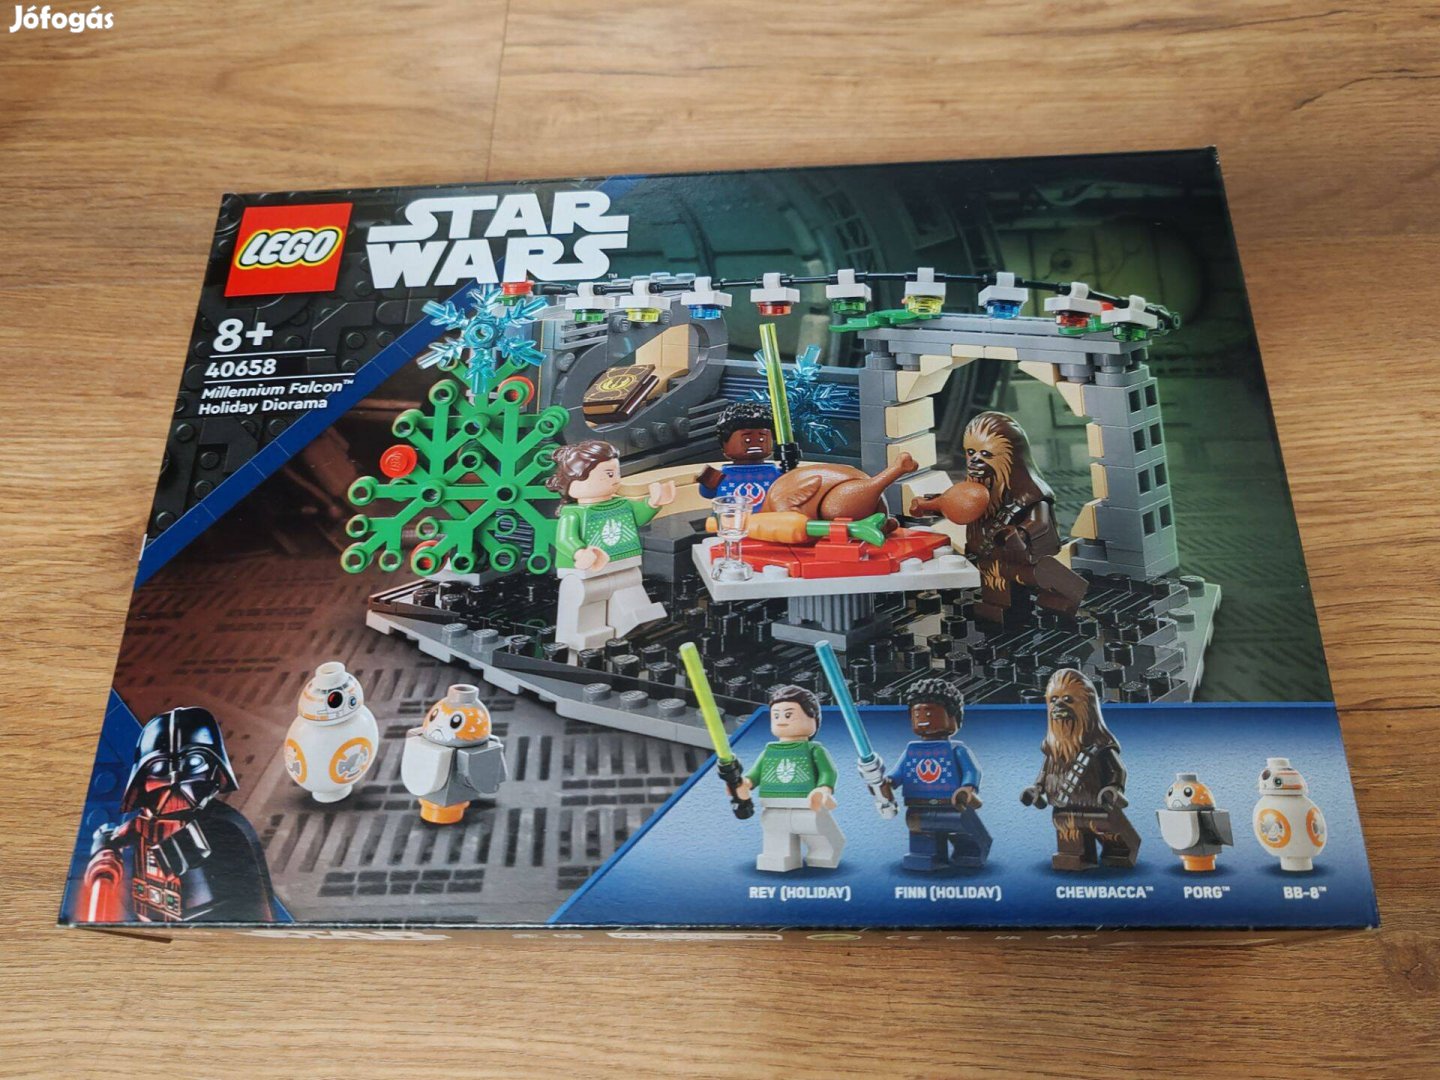 Eladó Lego Star Wars 40658 - Millennium Falcon Ünnepi Dioráma, Új